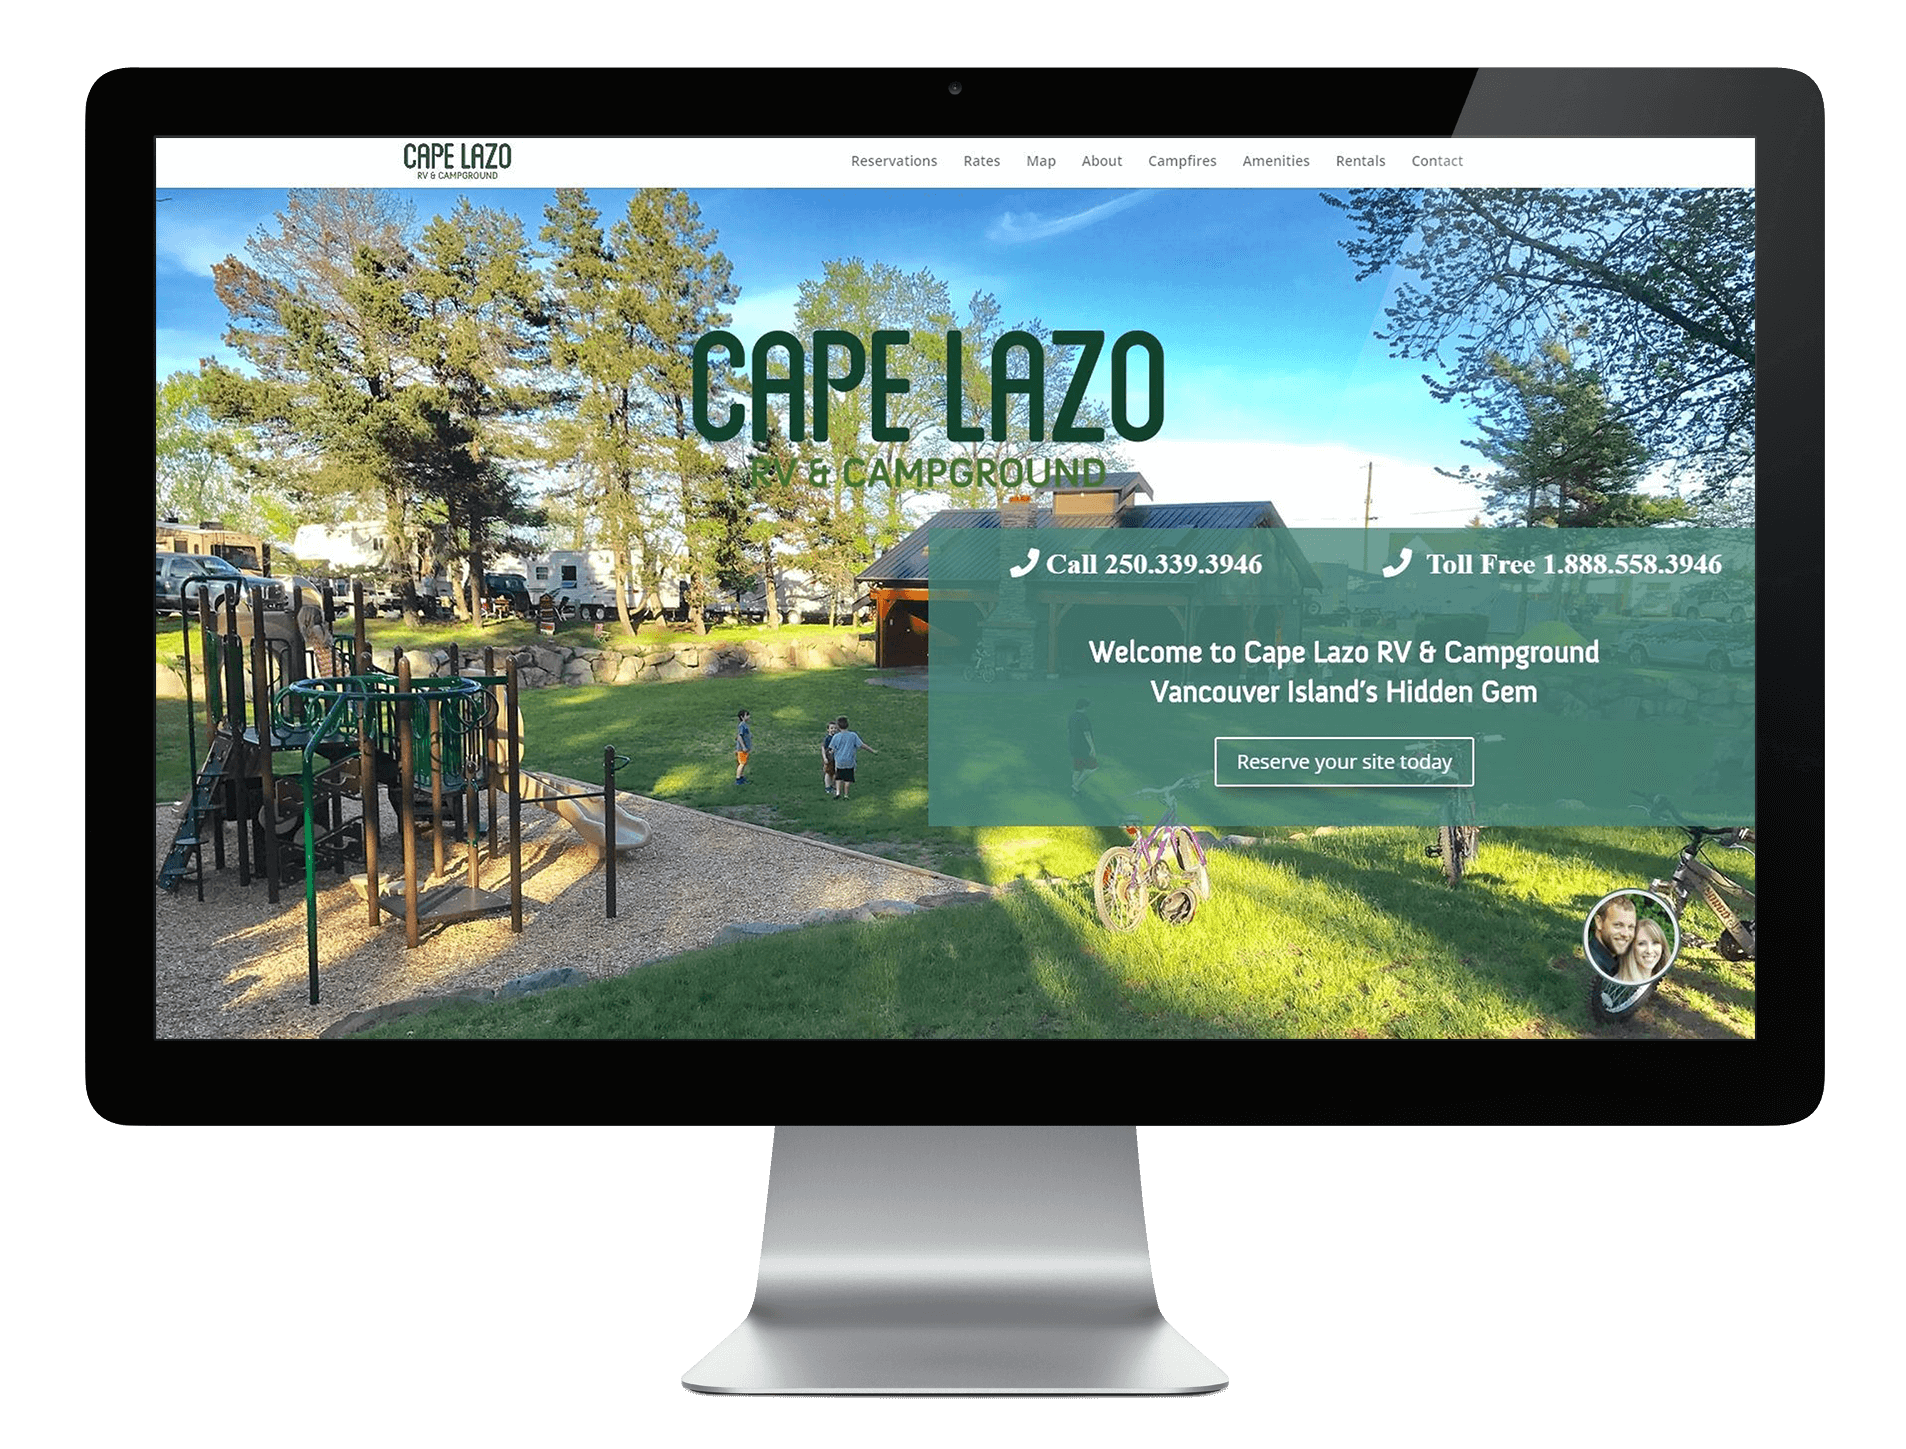 Cape Lazo RV & Campground Website Screen Capture